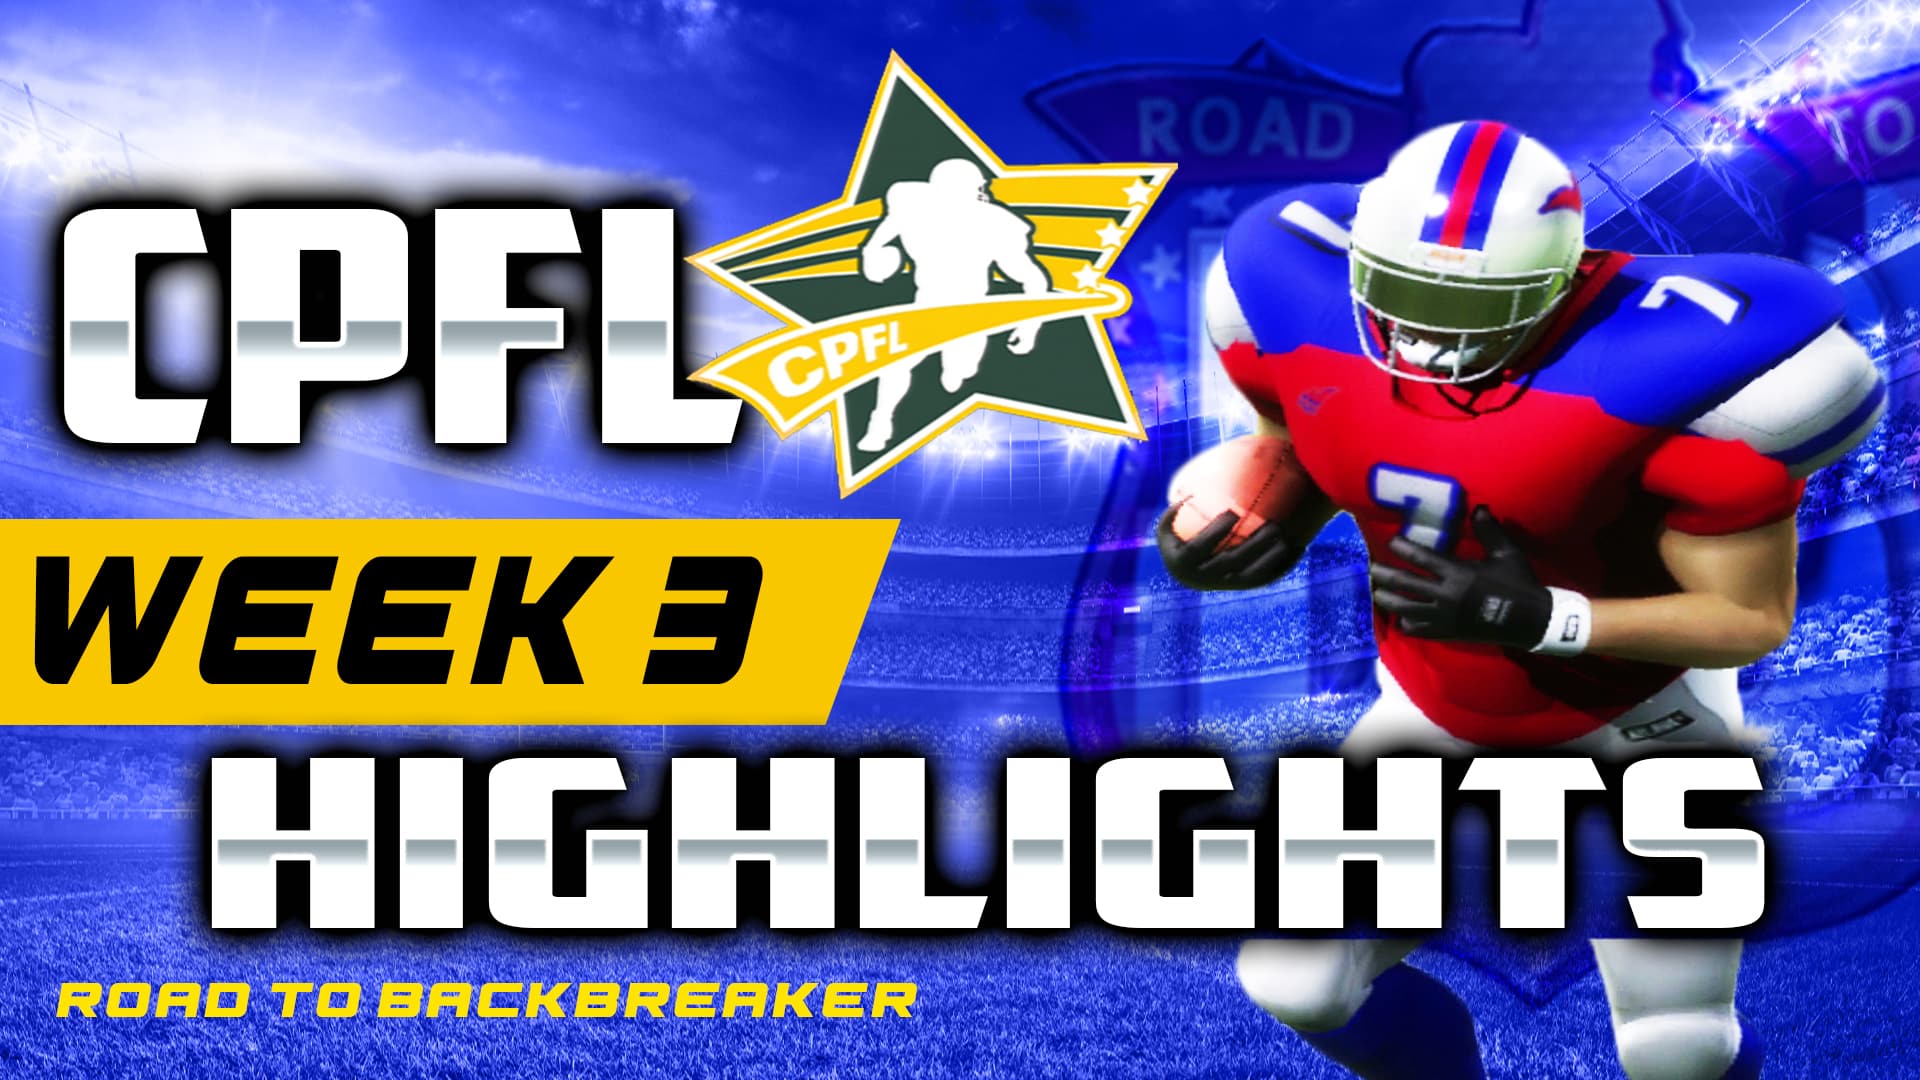 Road To Backbreaker (Division 3) Week 3 Highlights